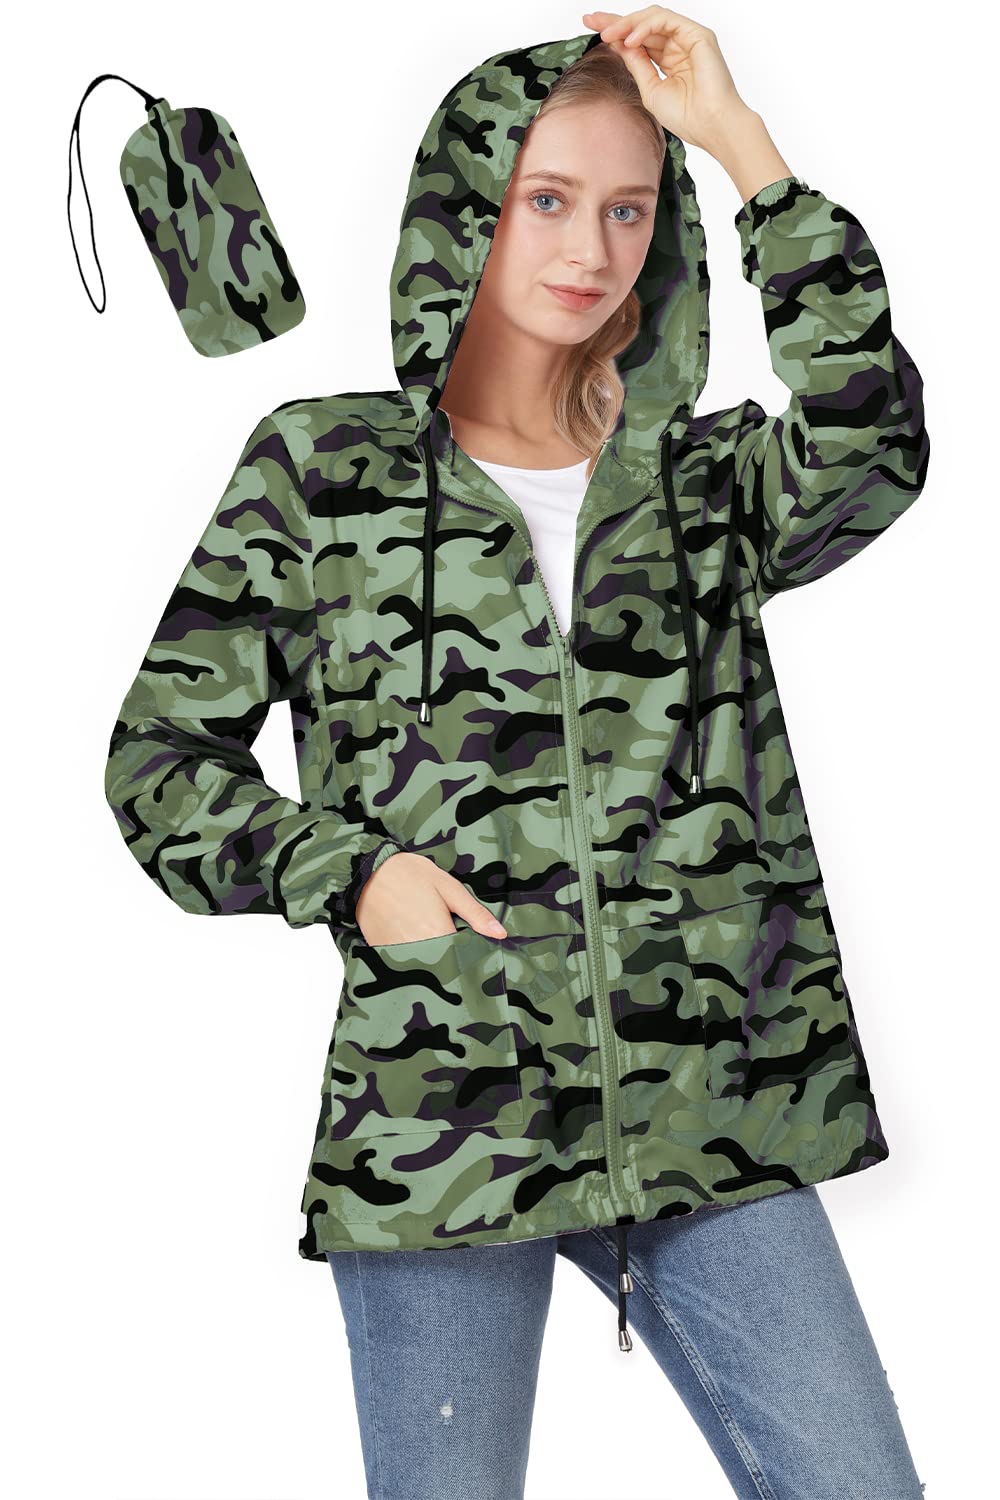 JTANIB Womens Raincoat Waterproof Windbreaker Lightweight Hooded Outdoor Packable Fashionable camouflage Jacket